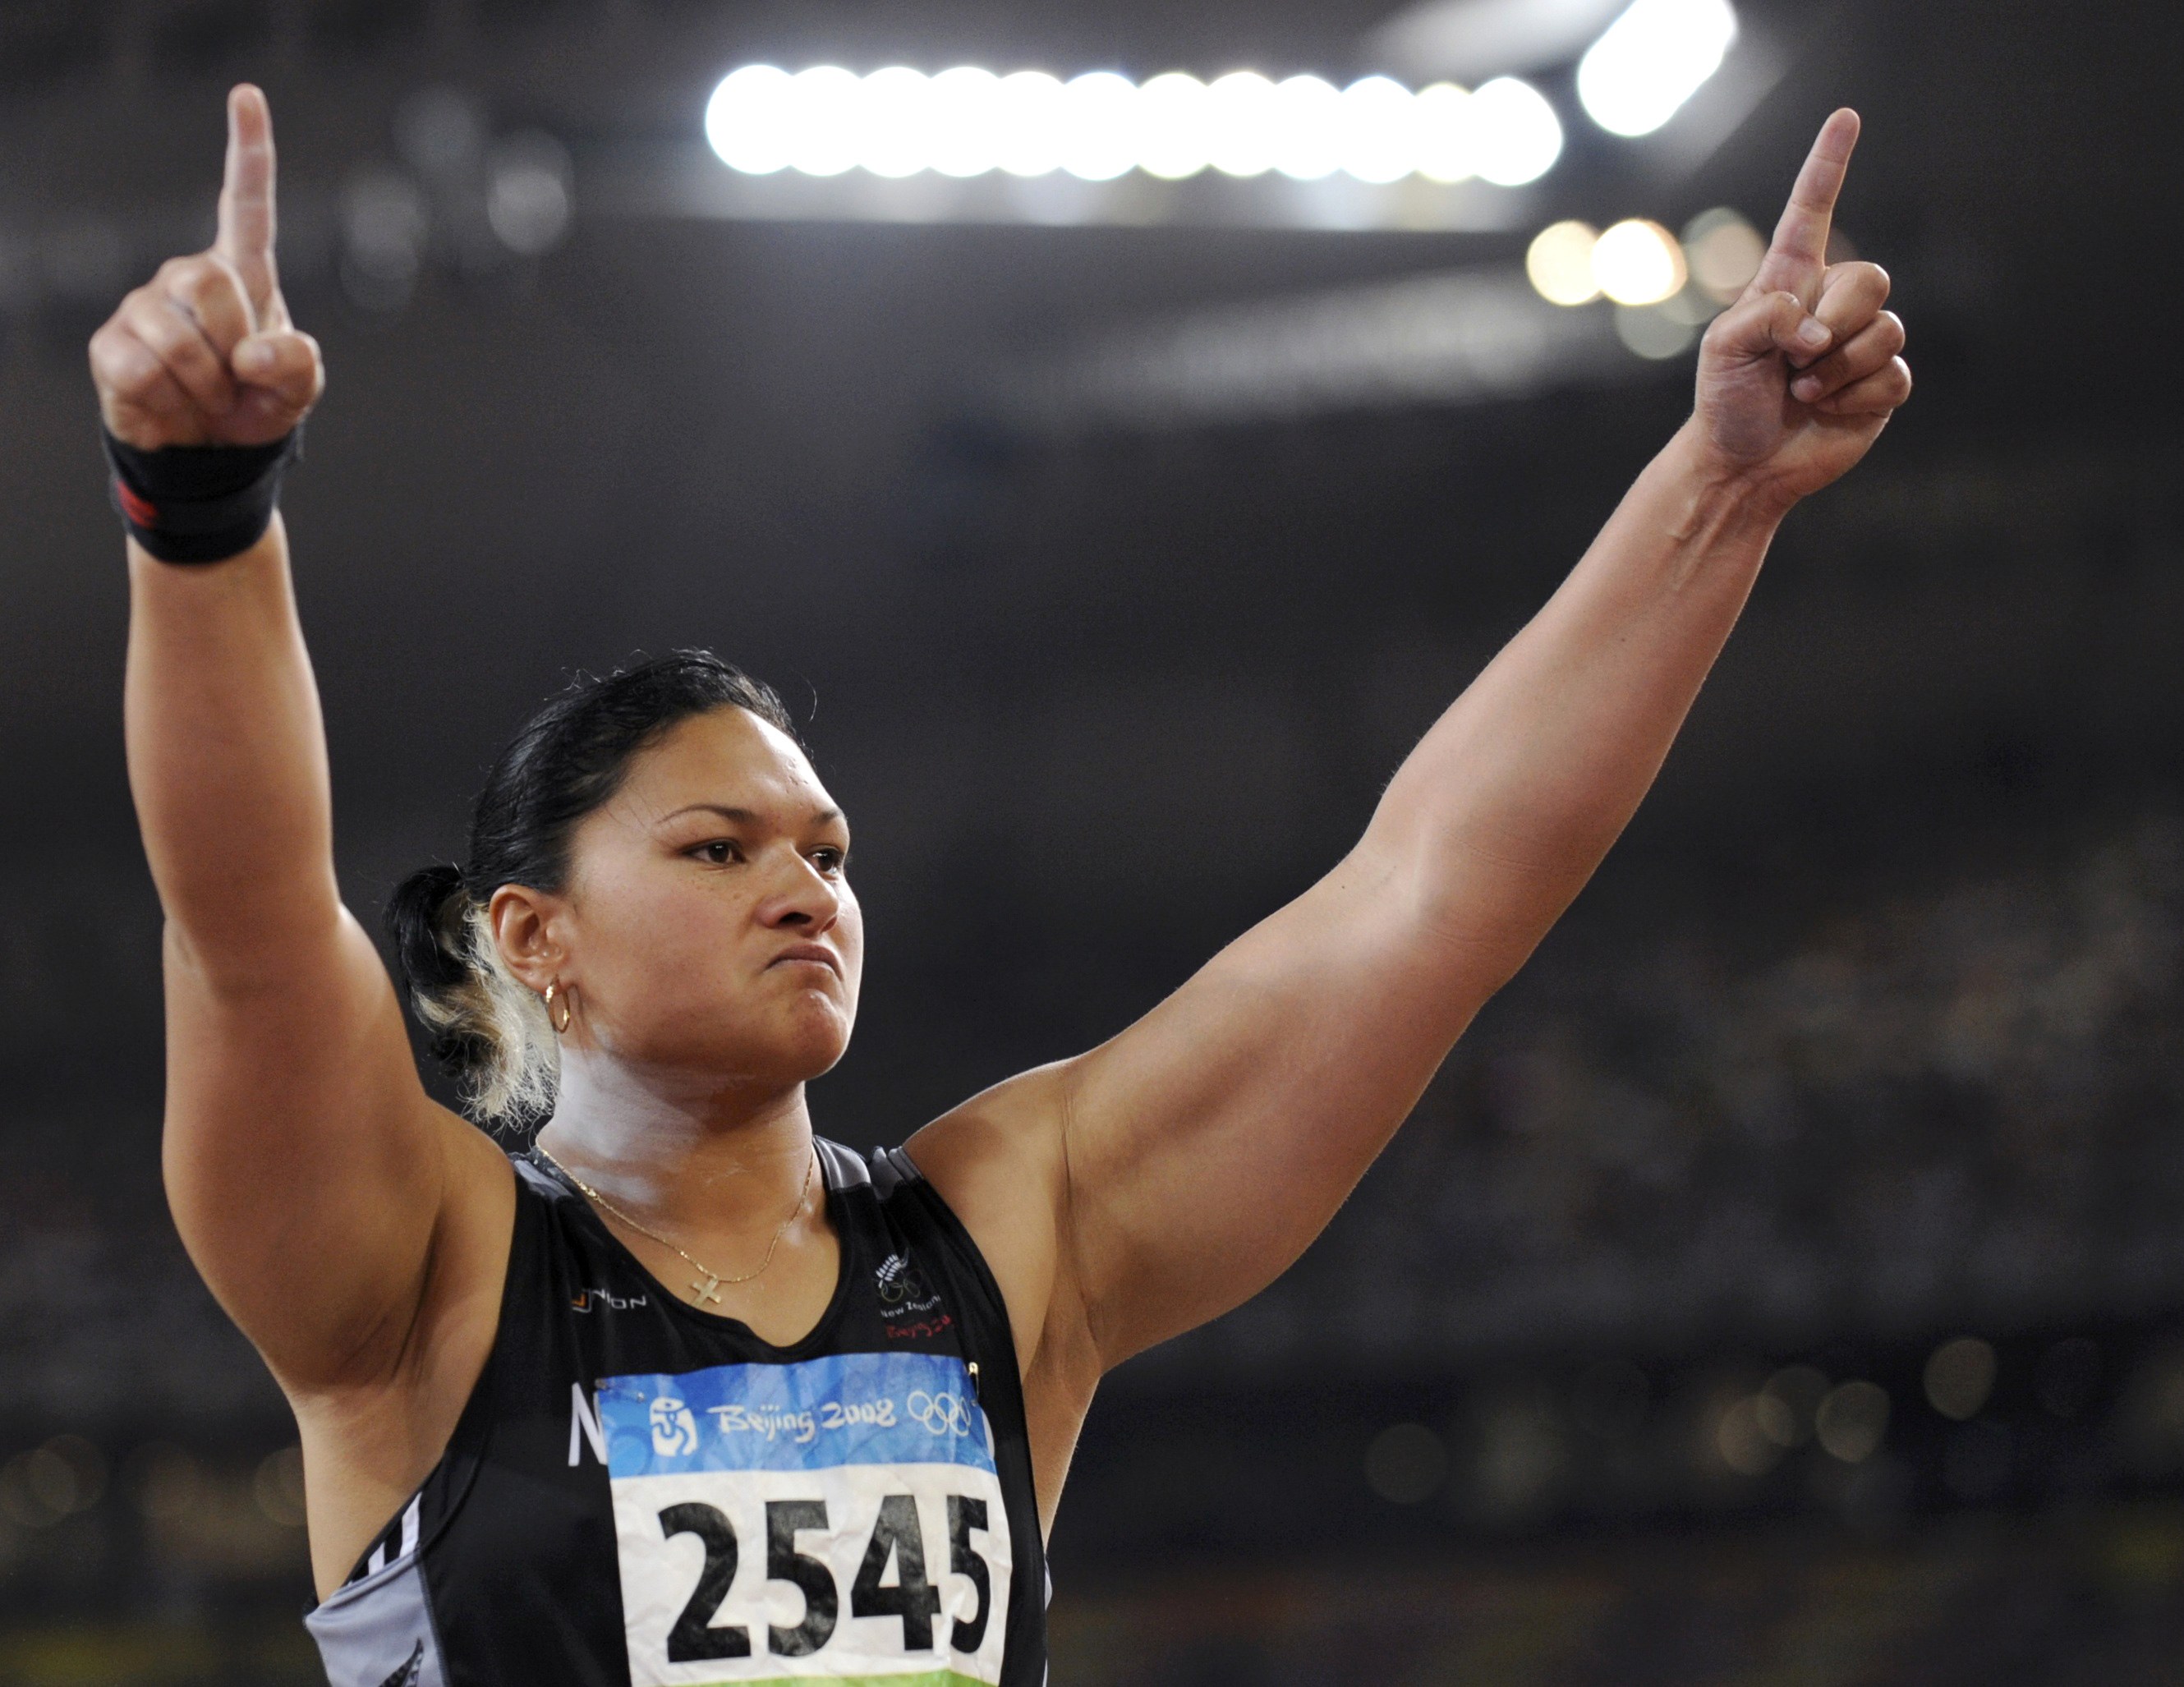 New Zealand's Vili wins women's shot put gold medal